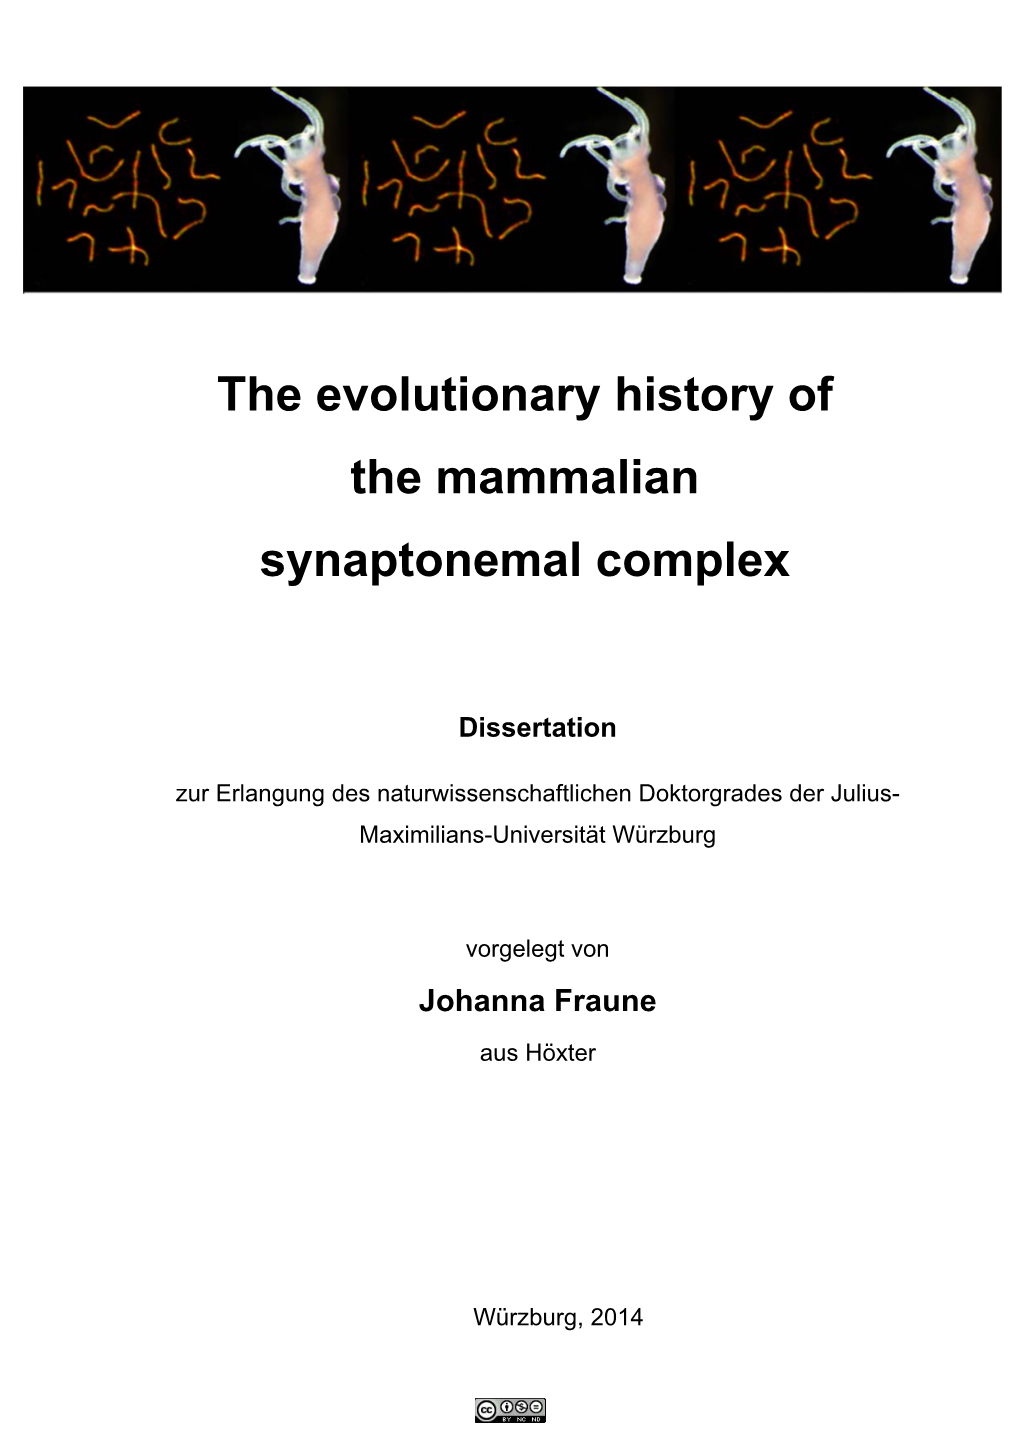 The Evolutionary History of the Mammalian Synaptonemal Complex